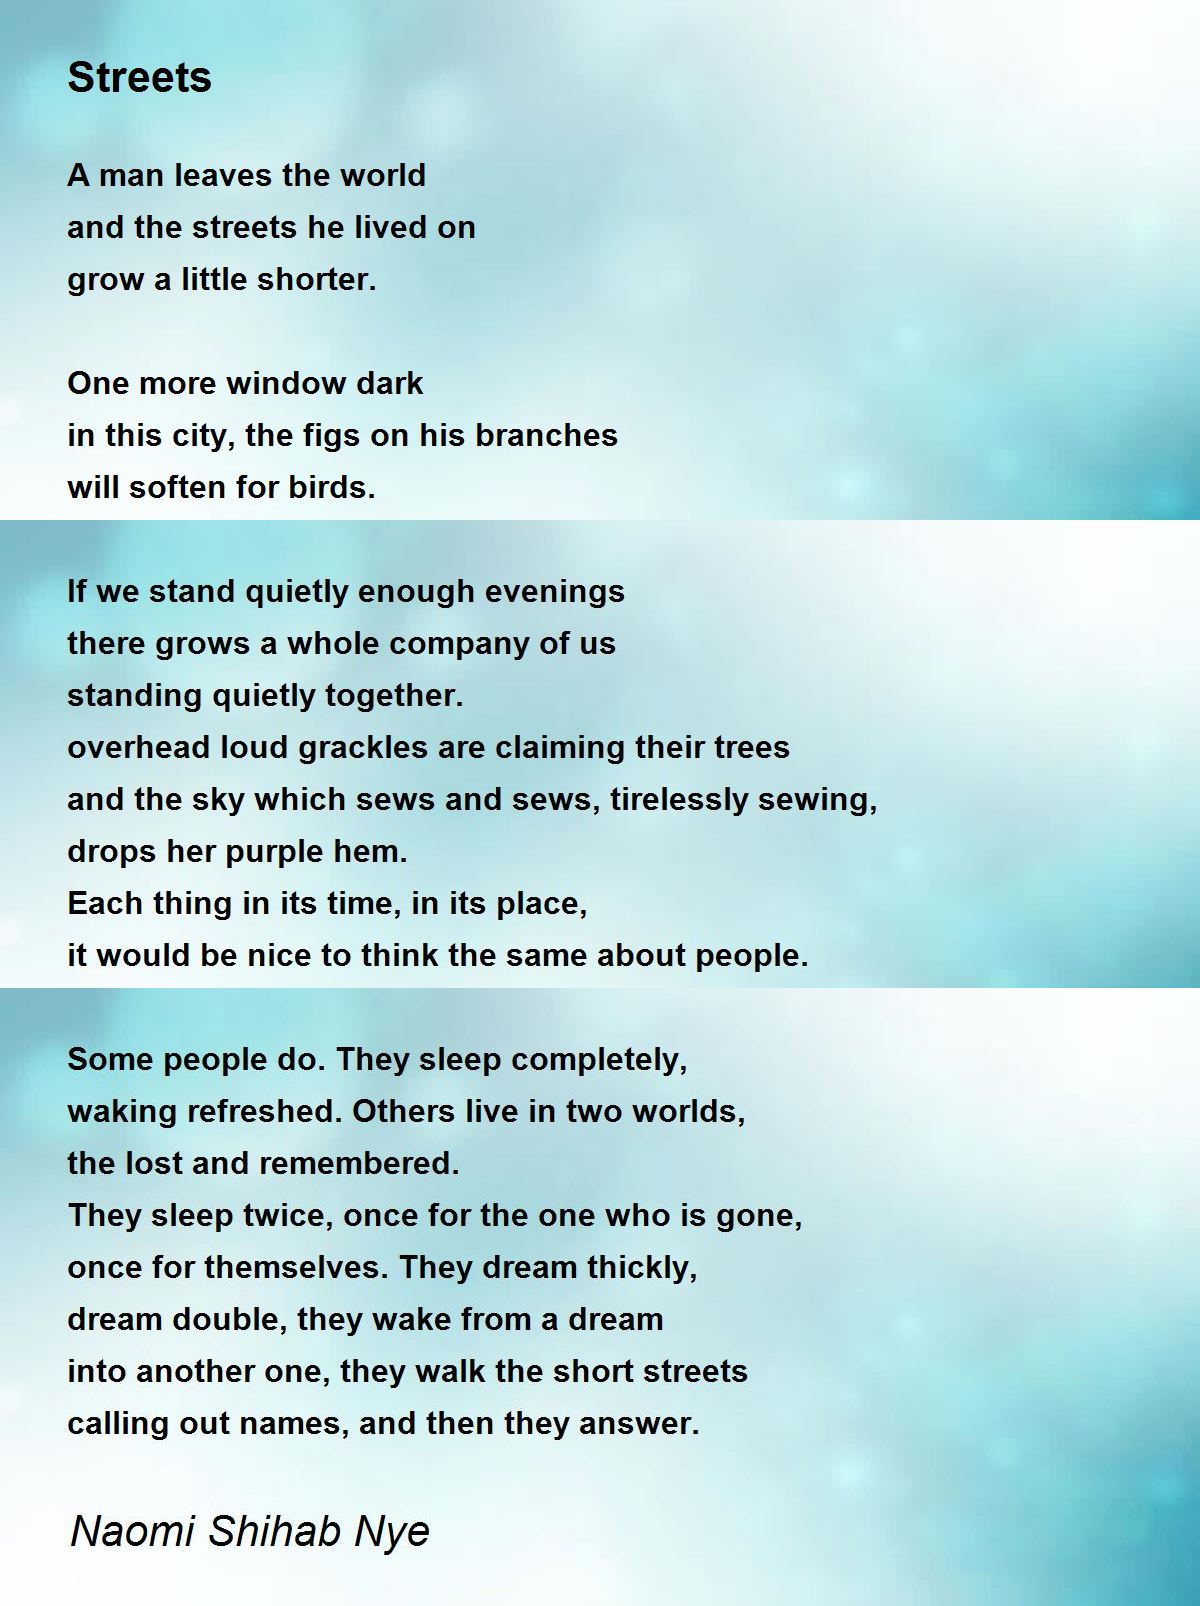 Streets Poem by Naomi Shihab Nye - Poem Hunter